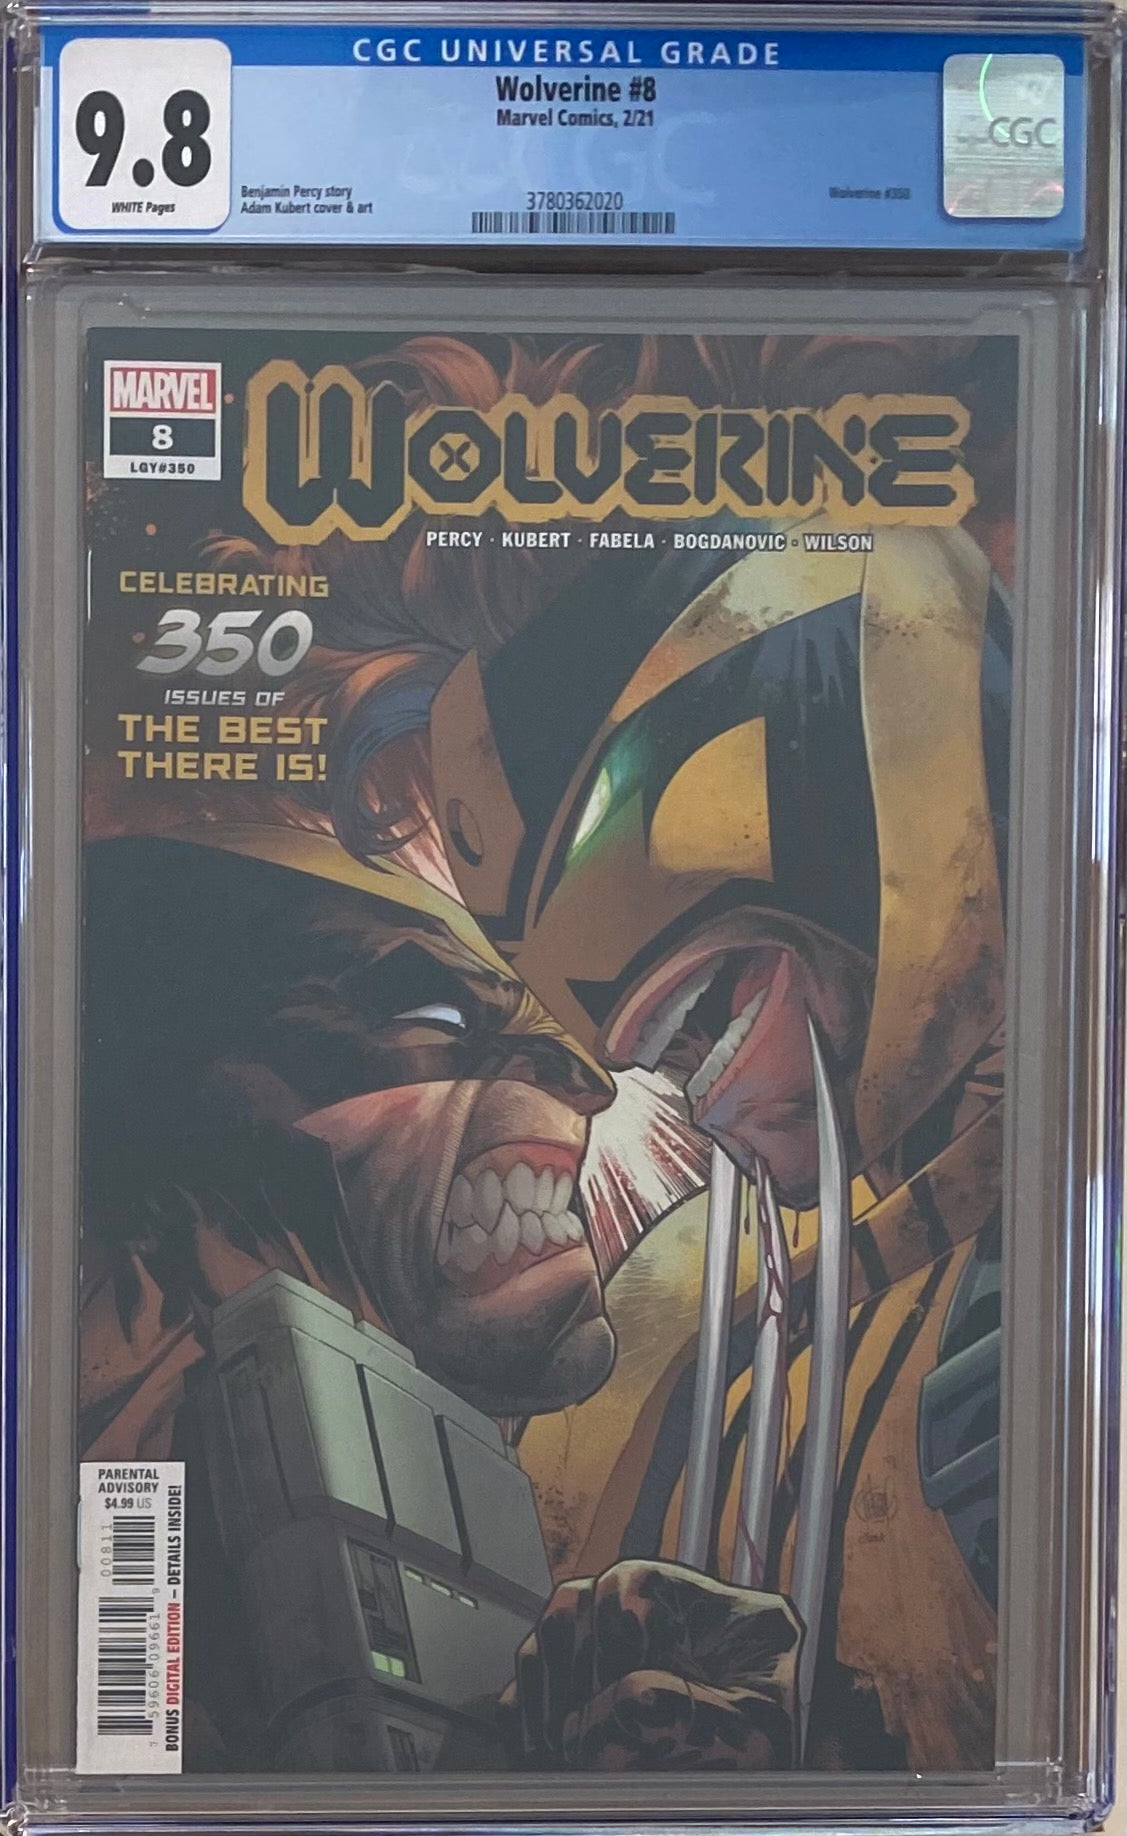 Wolverine #8 (#350) CGC 9.8